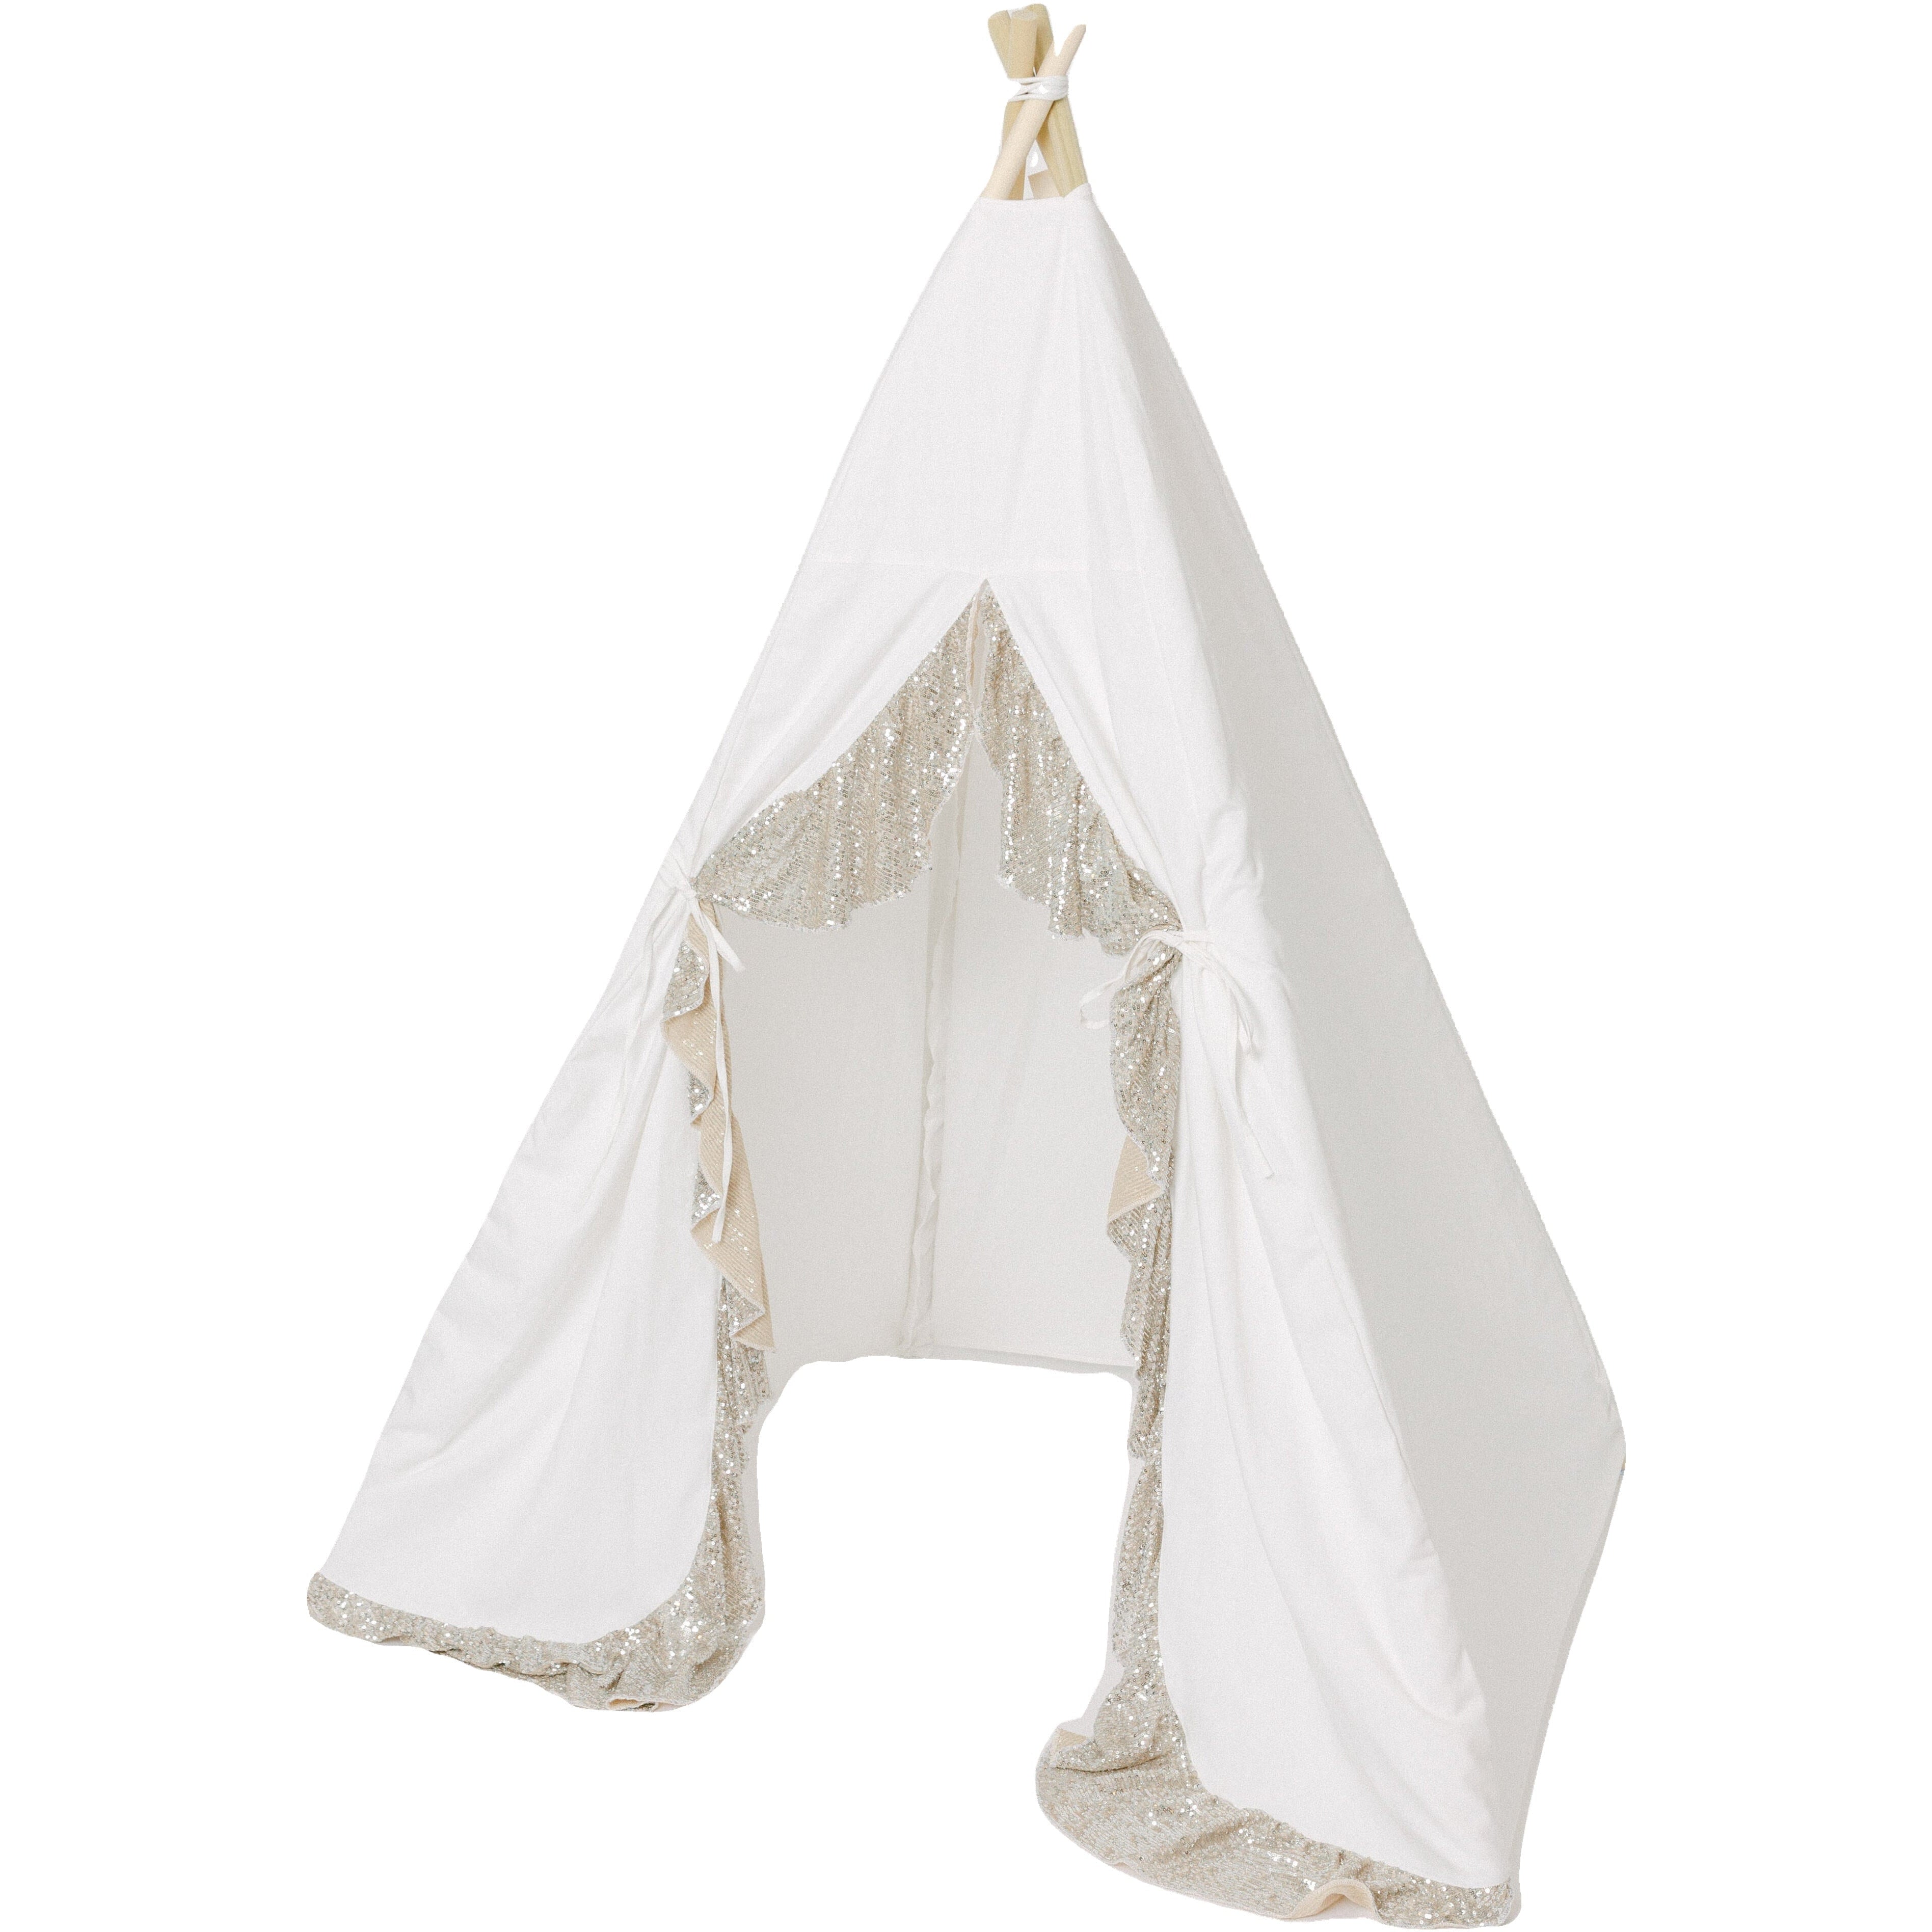 The Mariah Play Tent